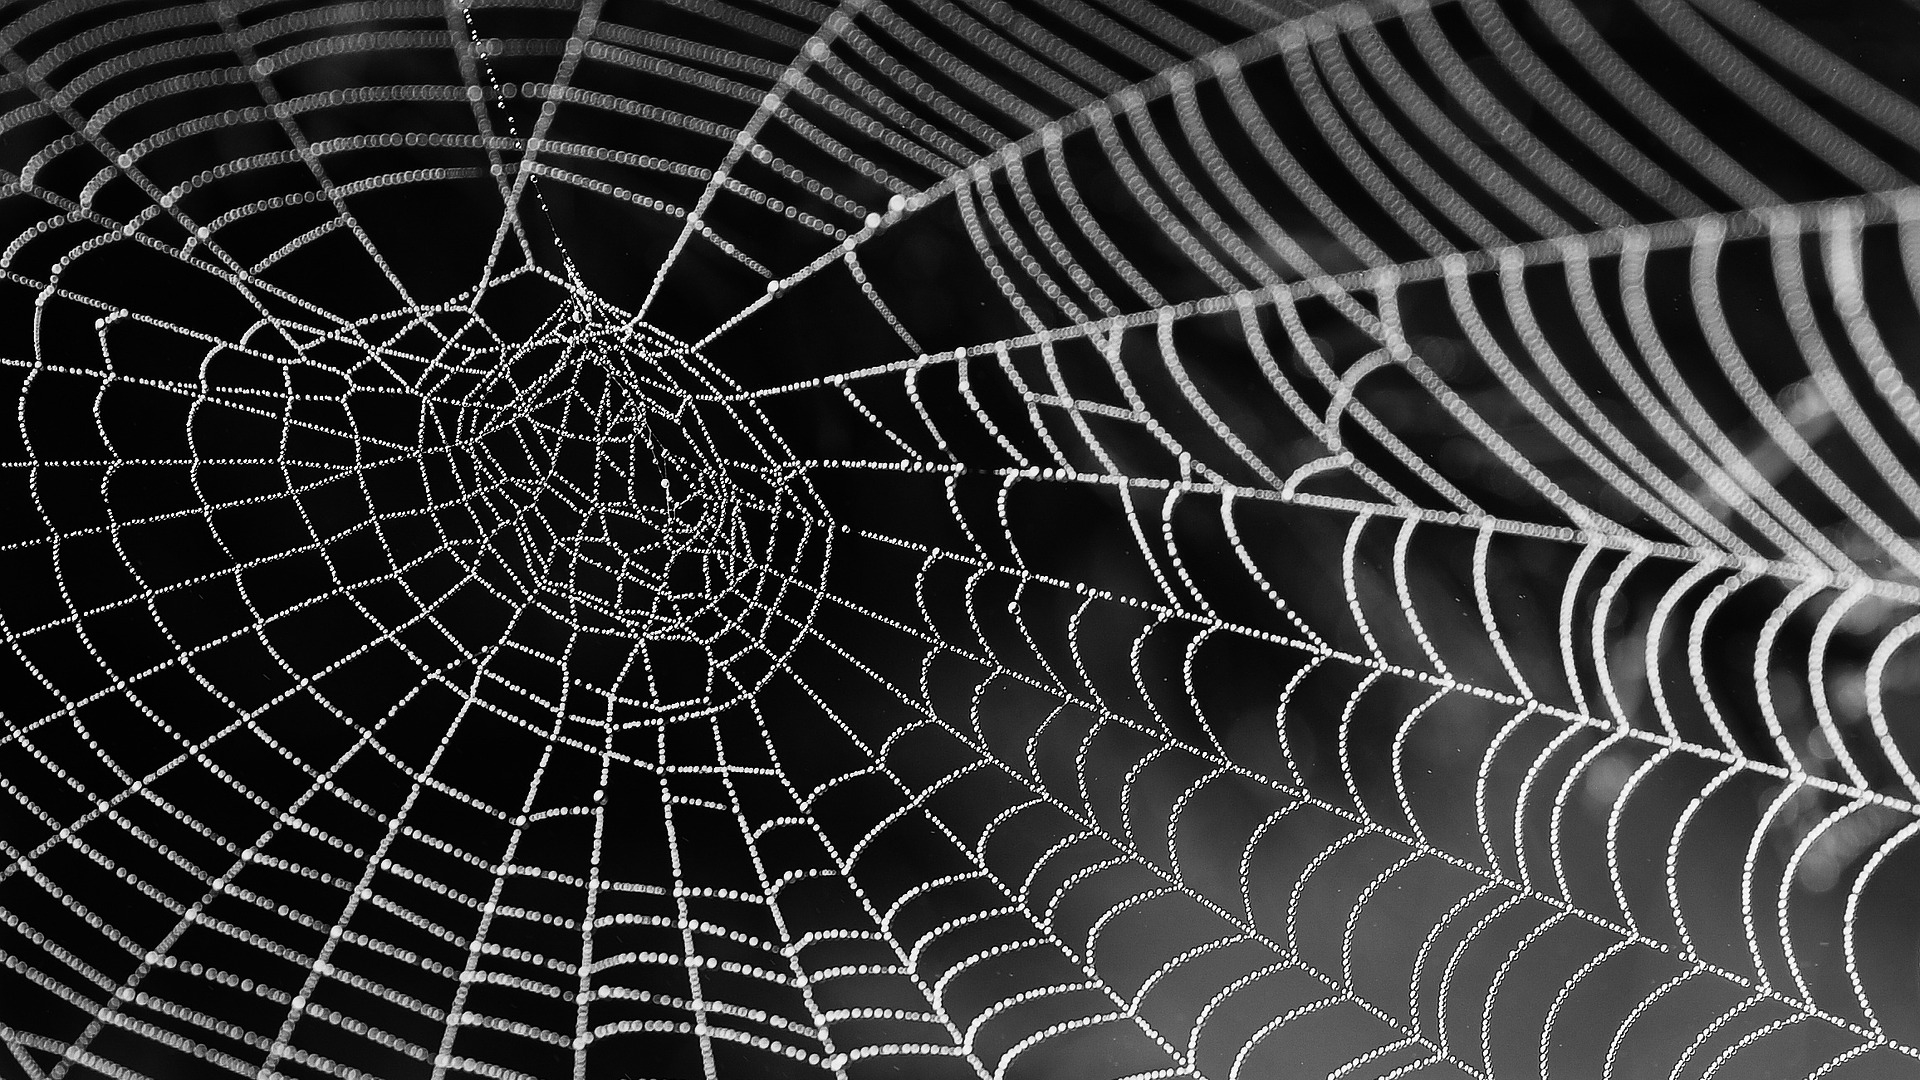 Jaring Laba-laba Black Widow Bisa Dipakai untuk Bangun Jembatan